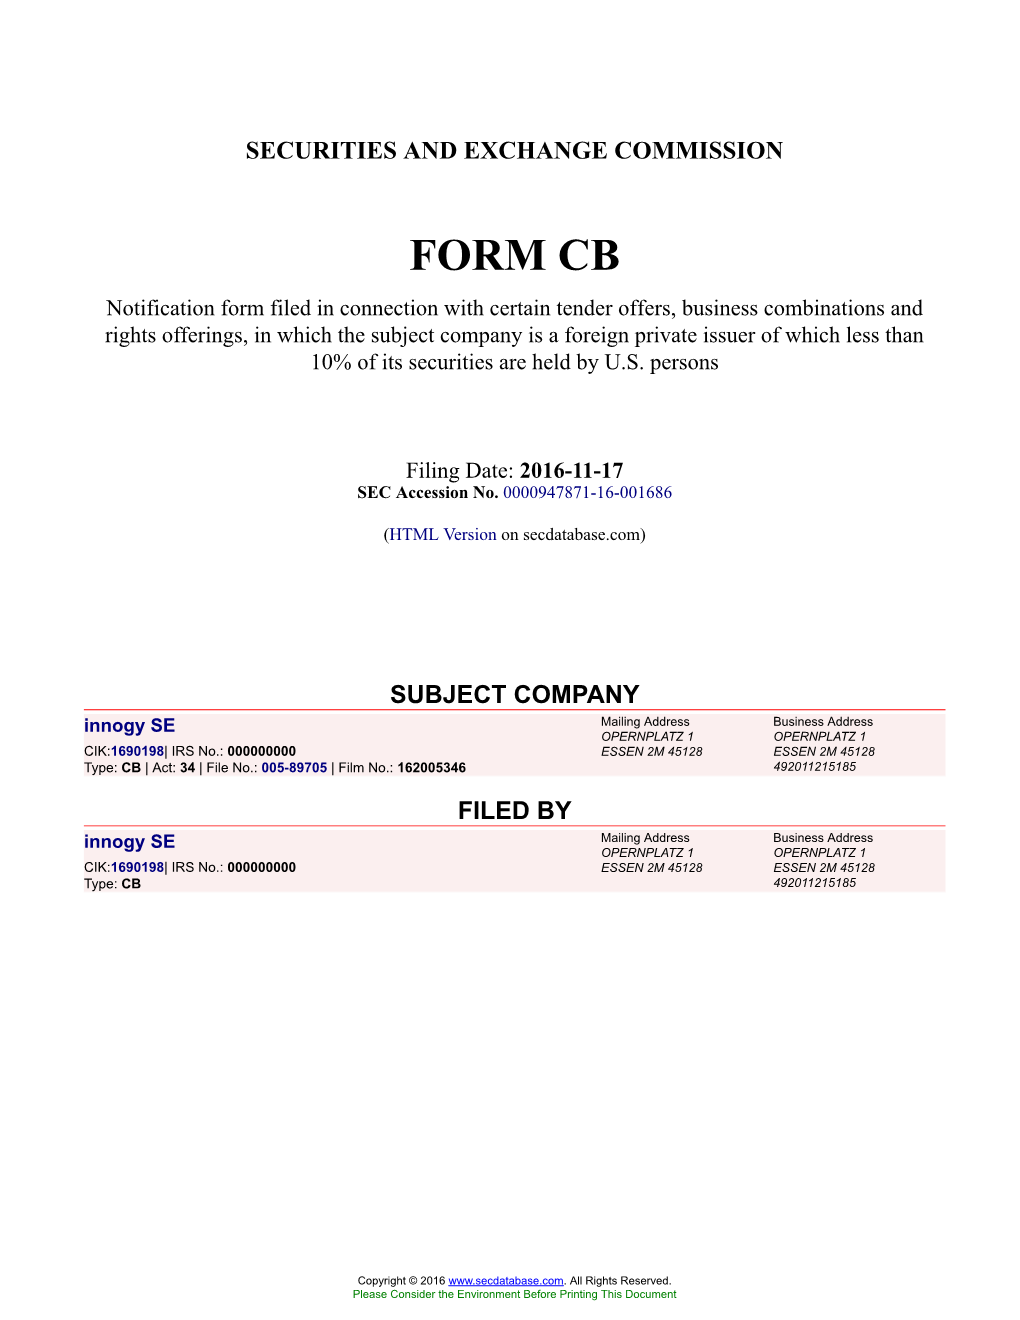 Innogy SE Form CB Filed 2016-11-17